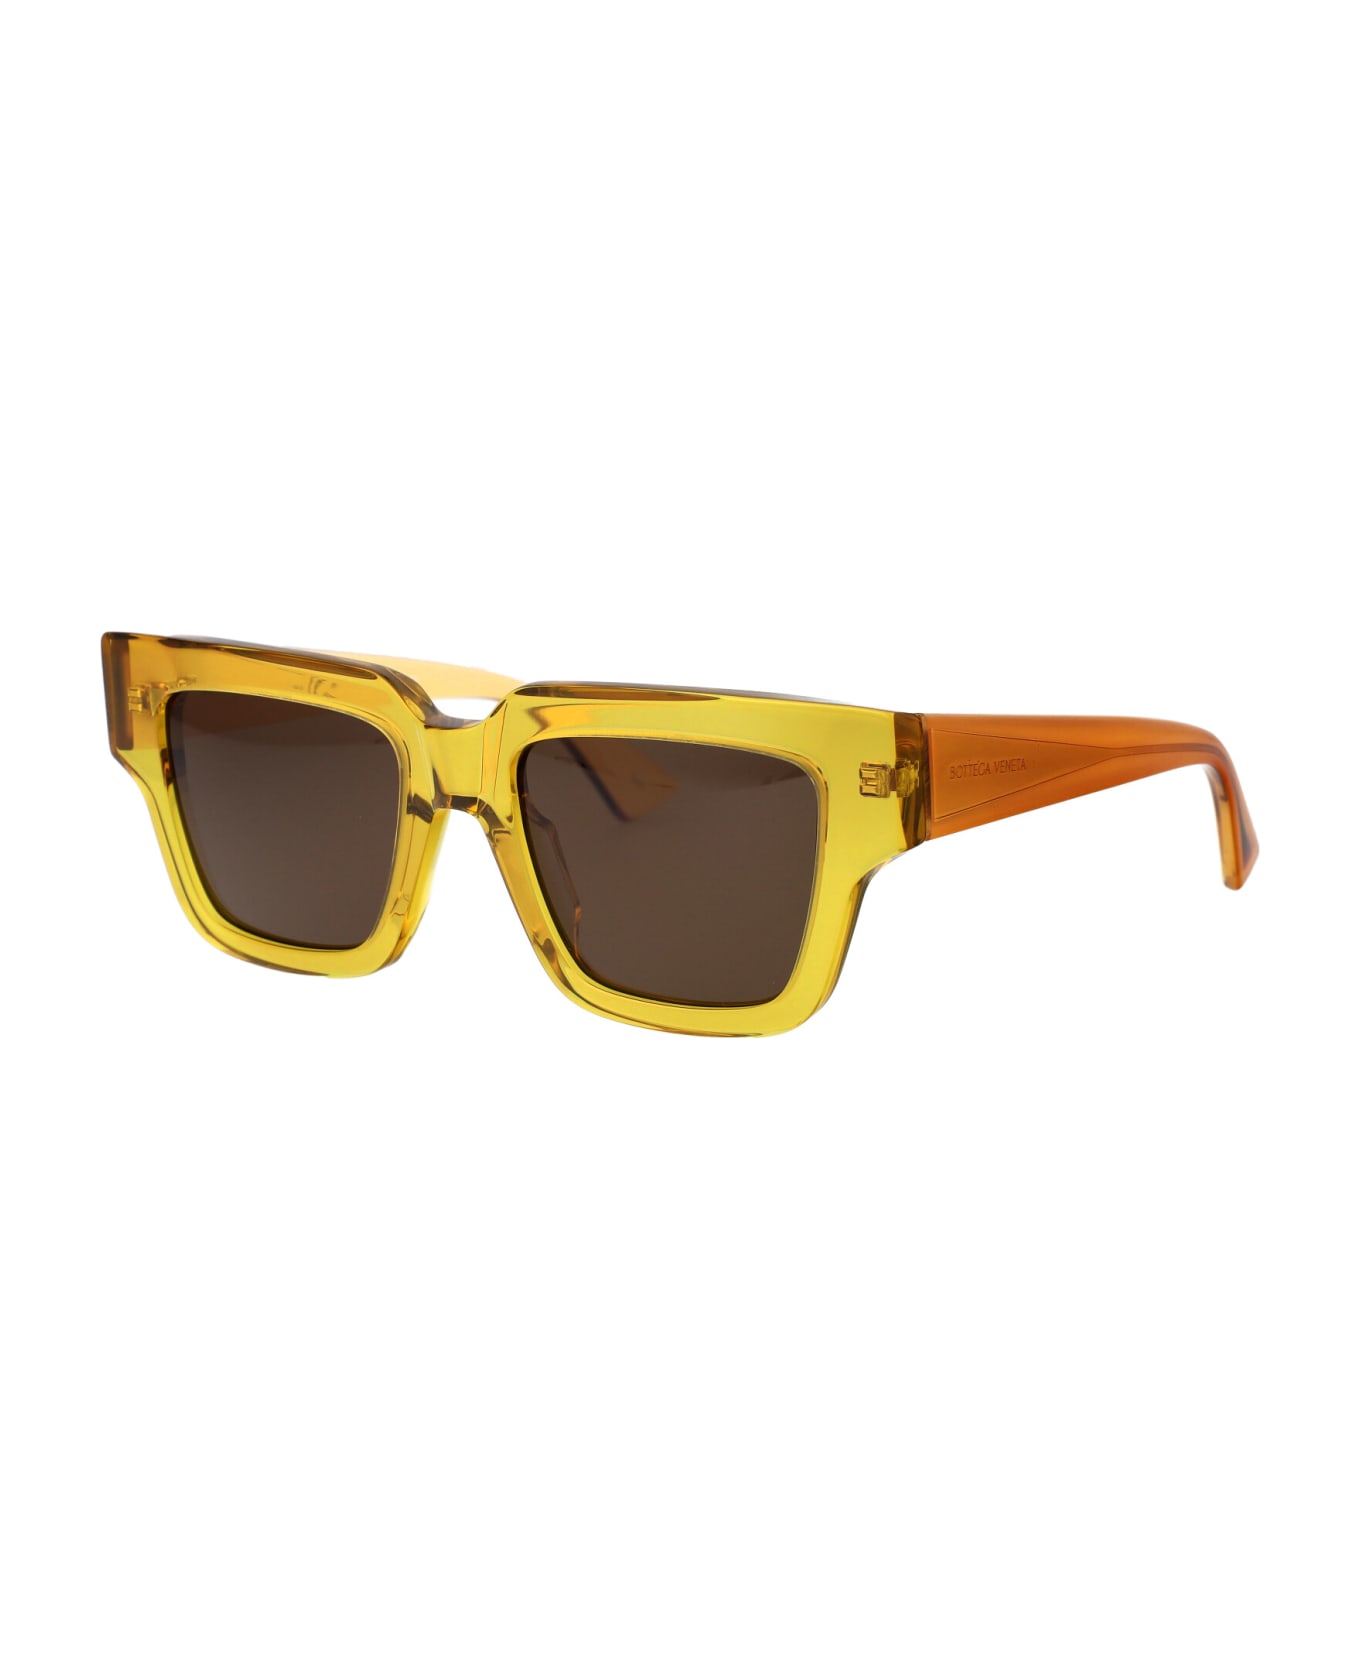 Bottega Veneta Eyewear Bv1276s Sunglasses - 004 YELLOW YELLOW BROWN